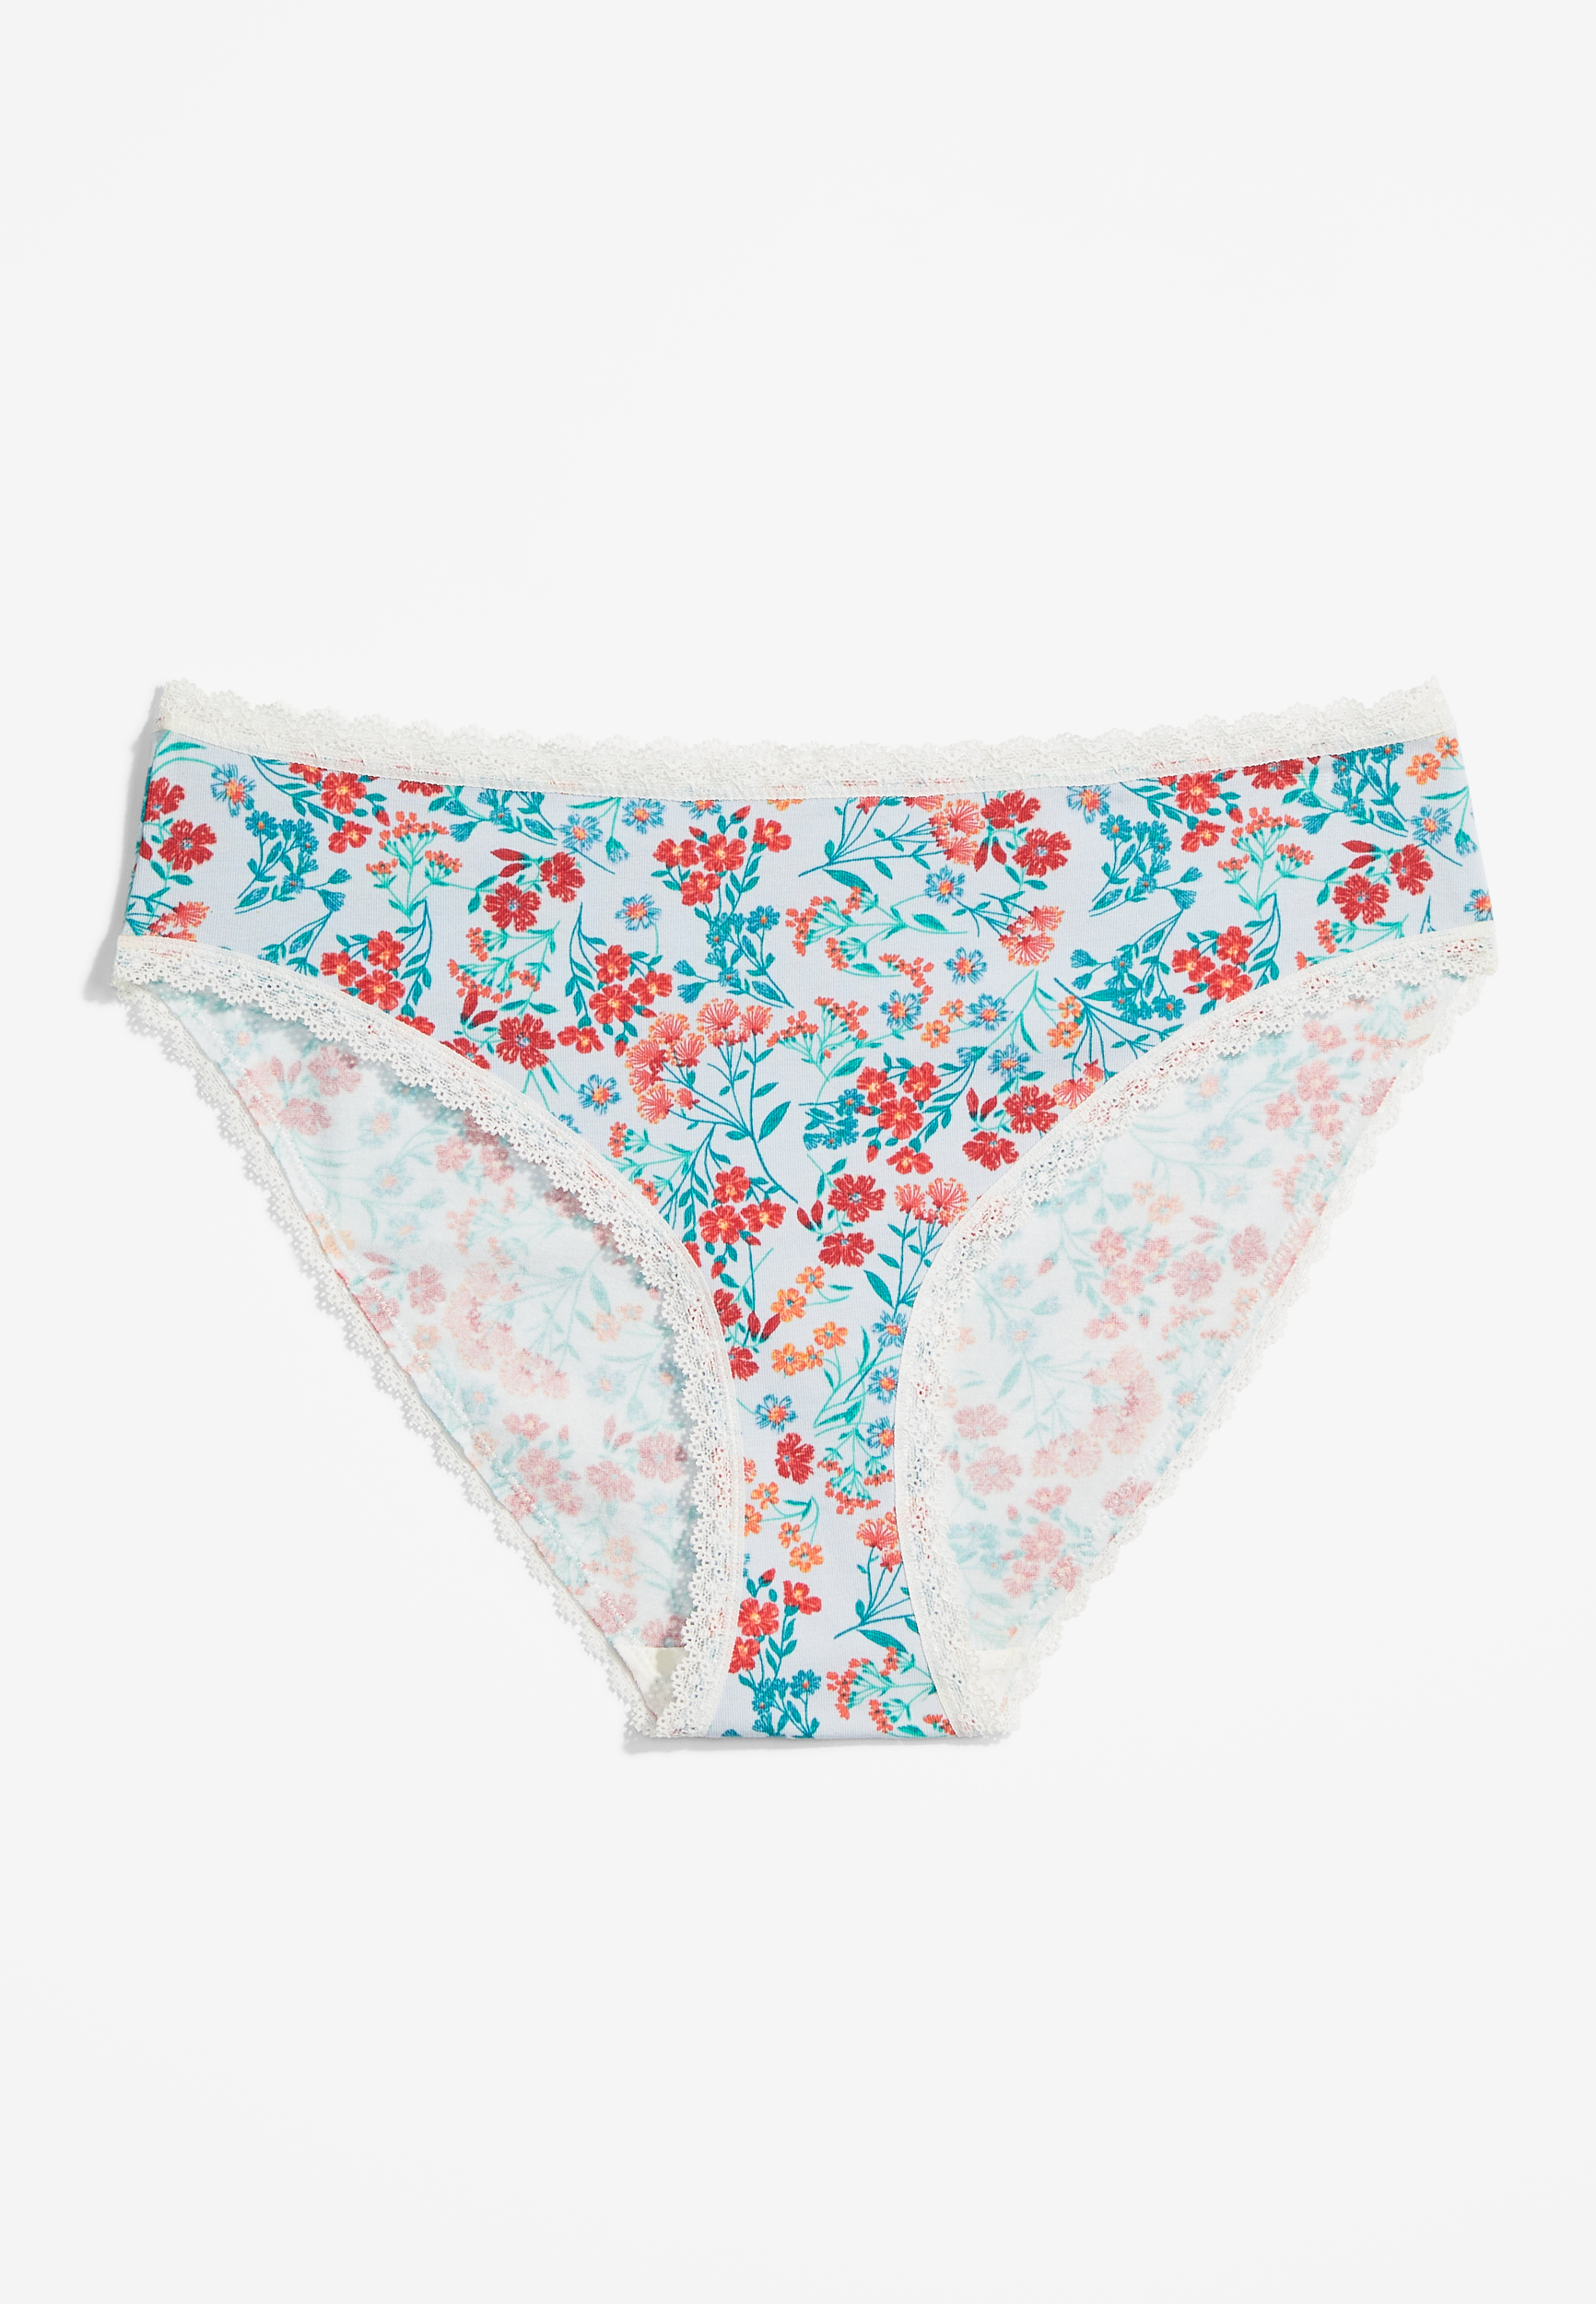 Simply Comfy Floral Cotton Bikini Panty | maurices